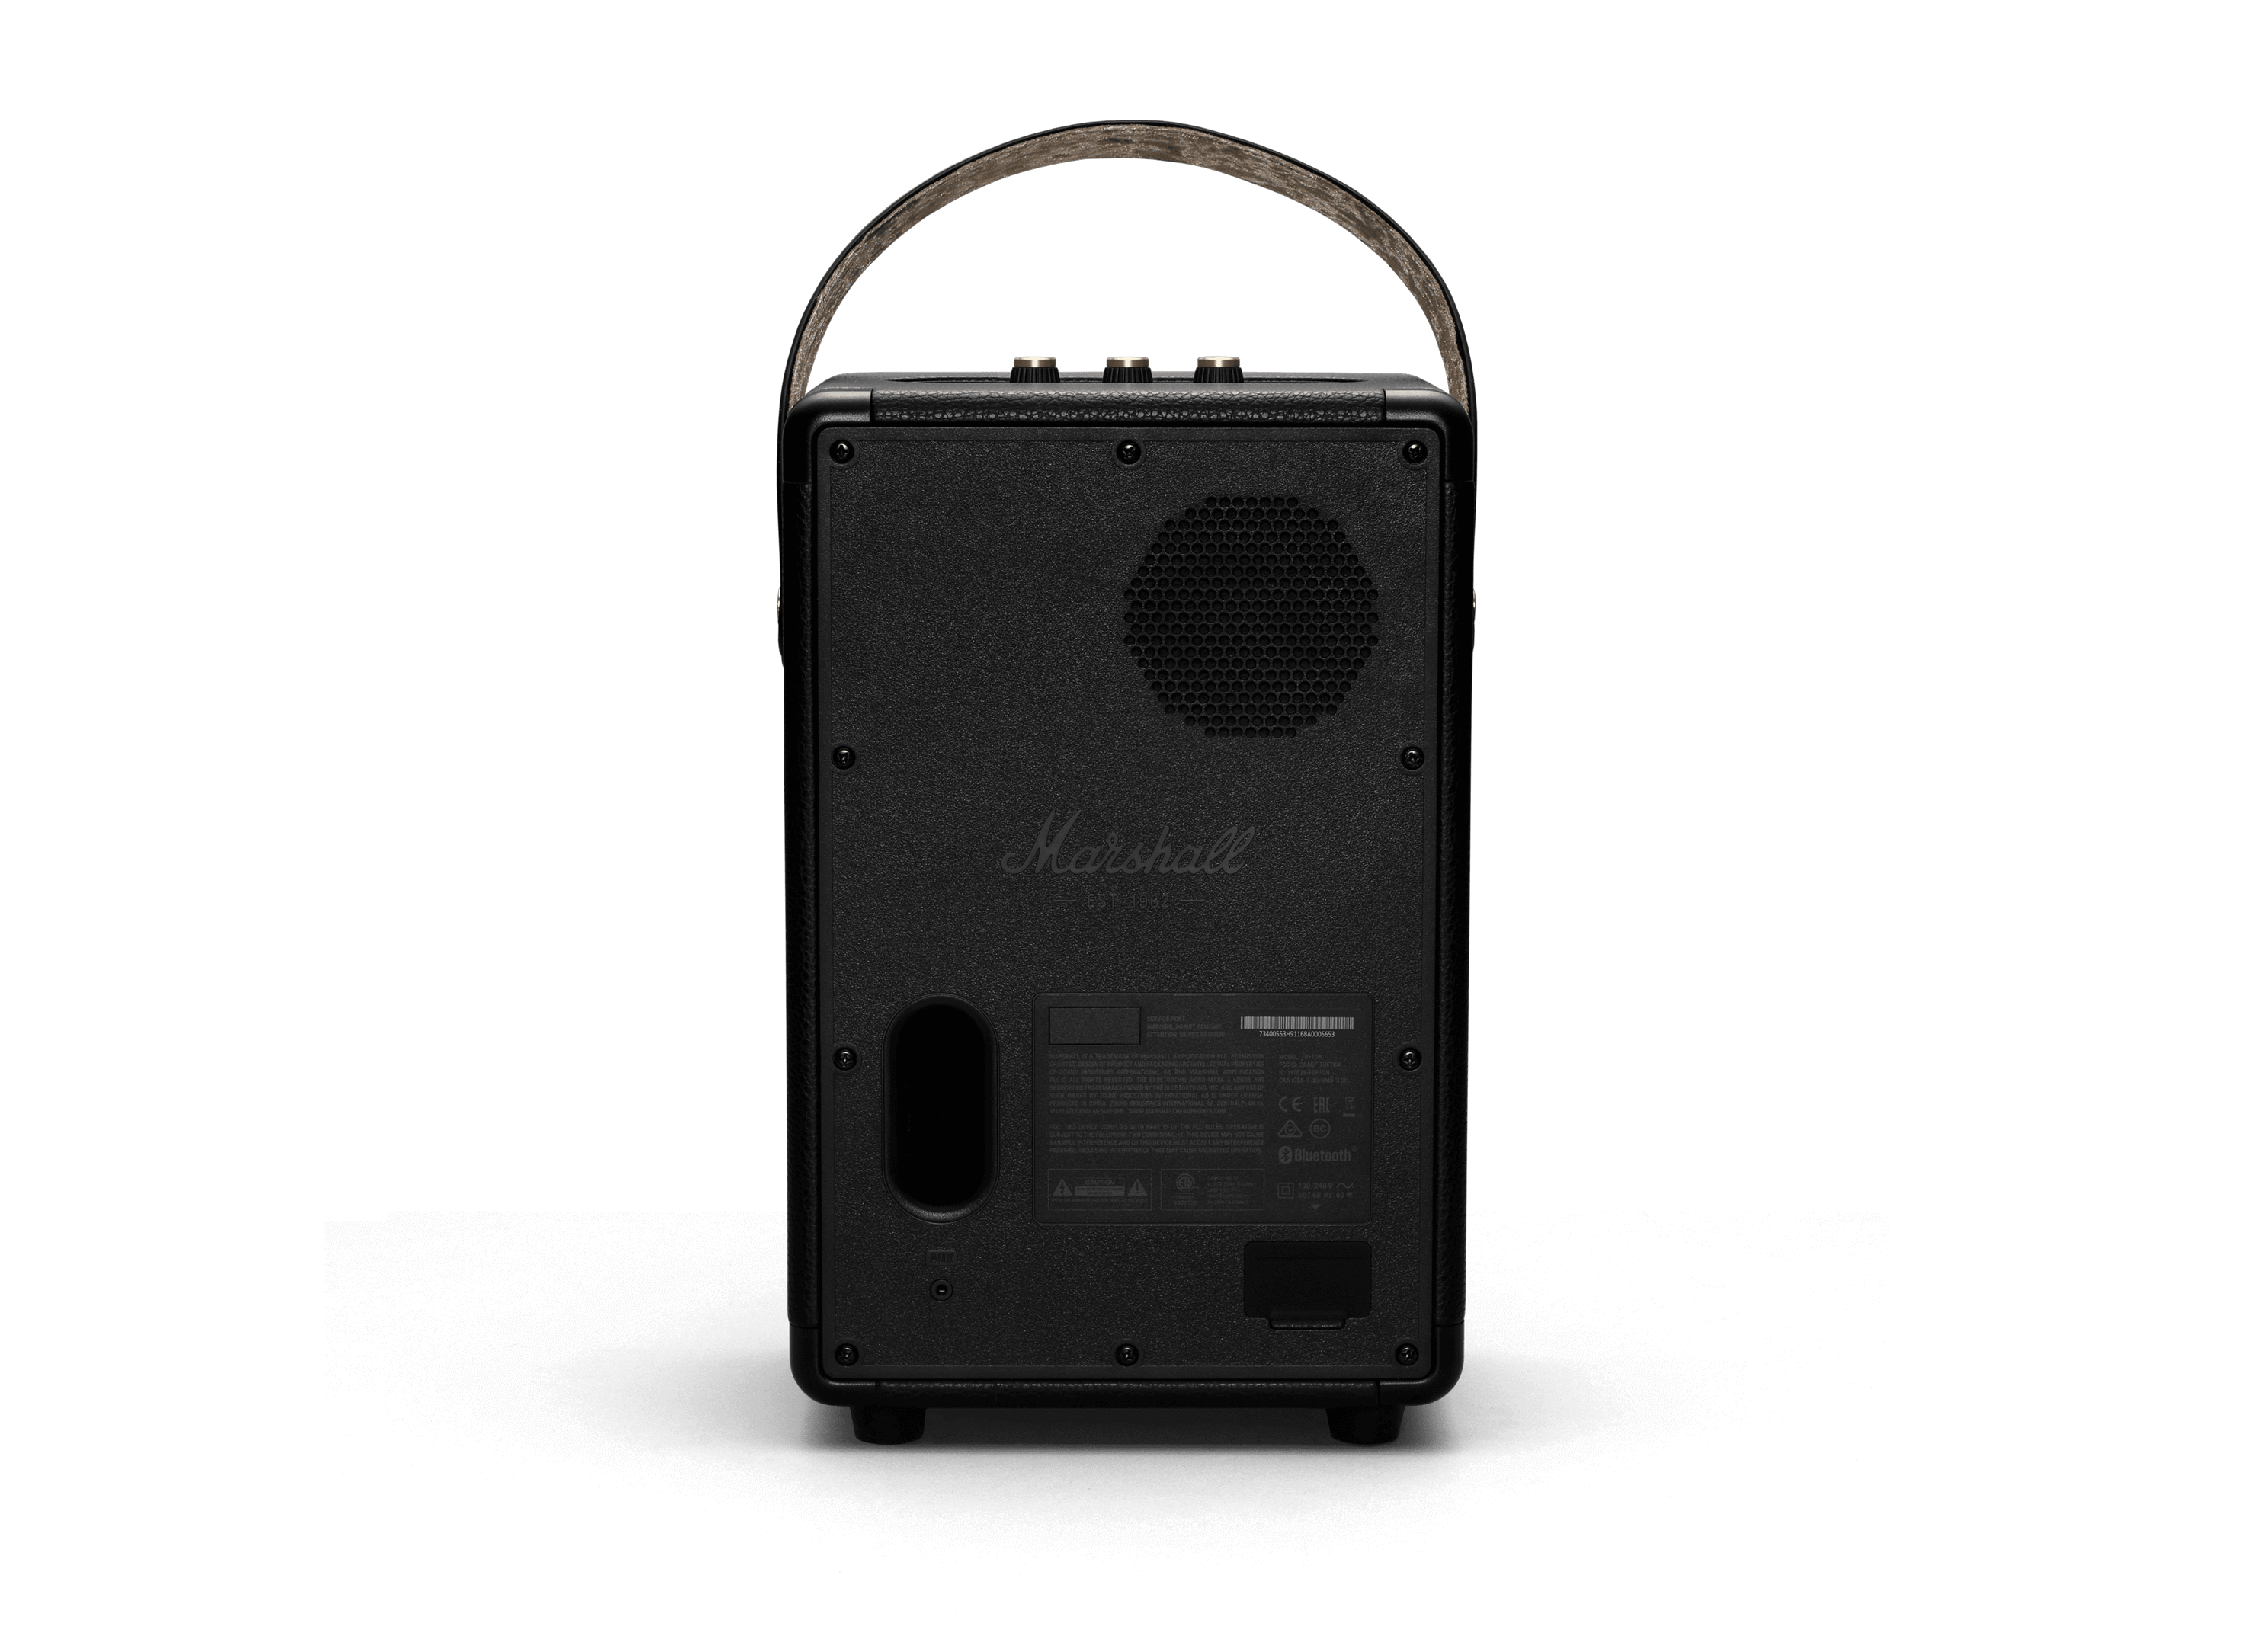 Enceinte portable MARSHALL Tufton Black & Brass